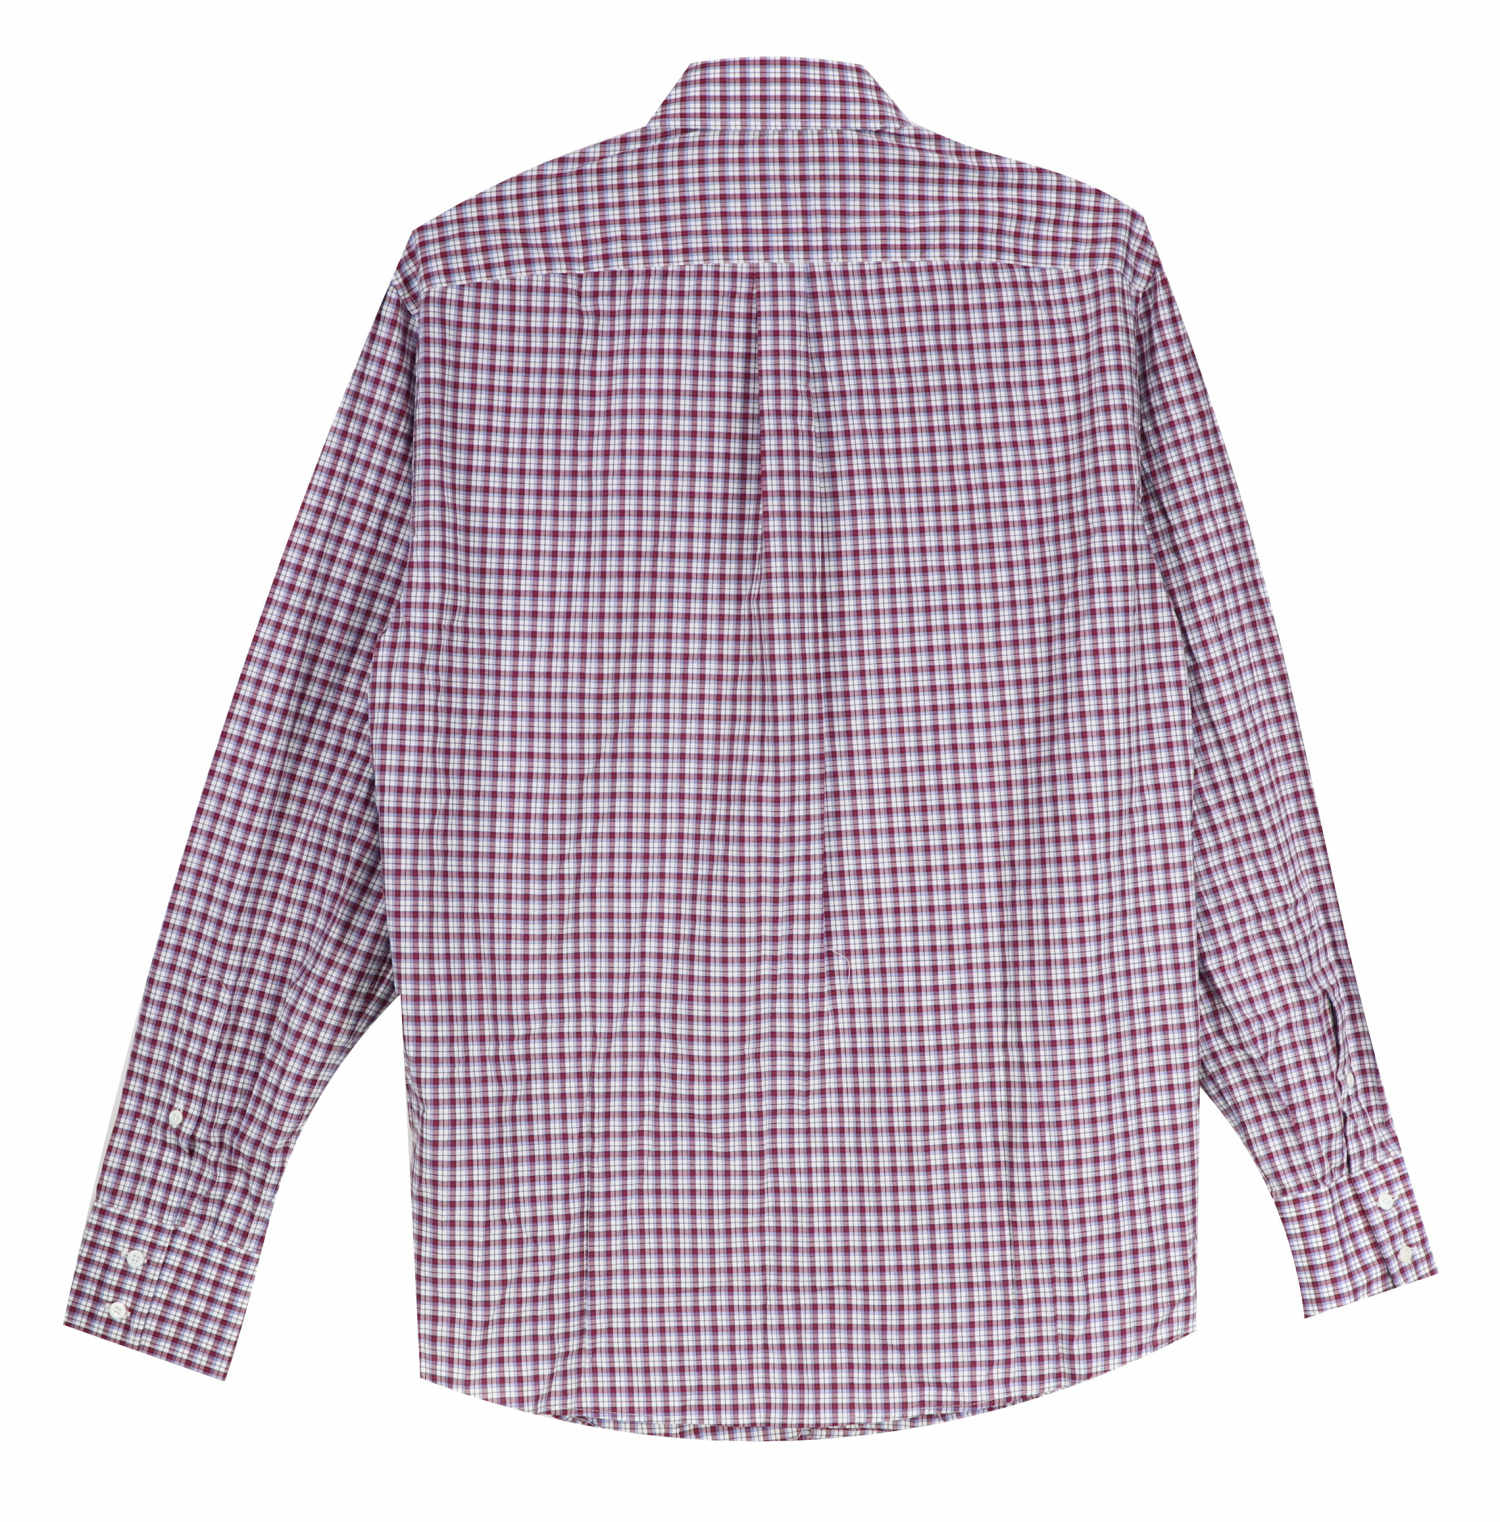 Brunello Cucinelli Men's Basic Fit Plaid Dress Shirt | eBay